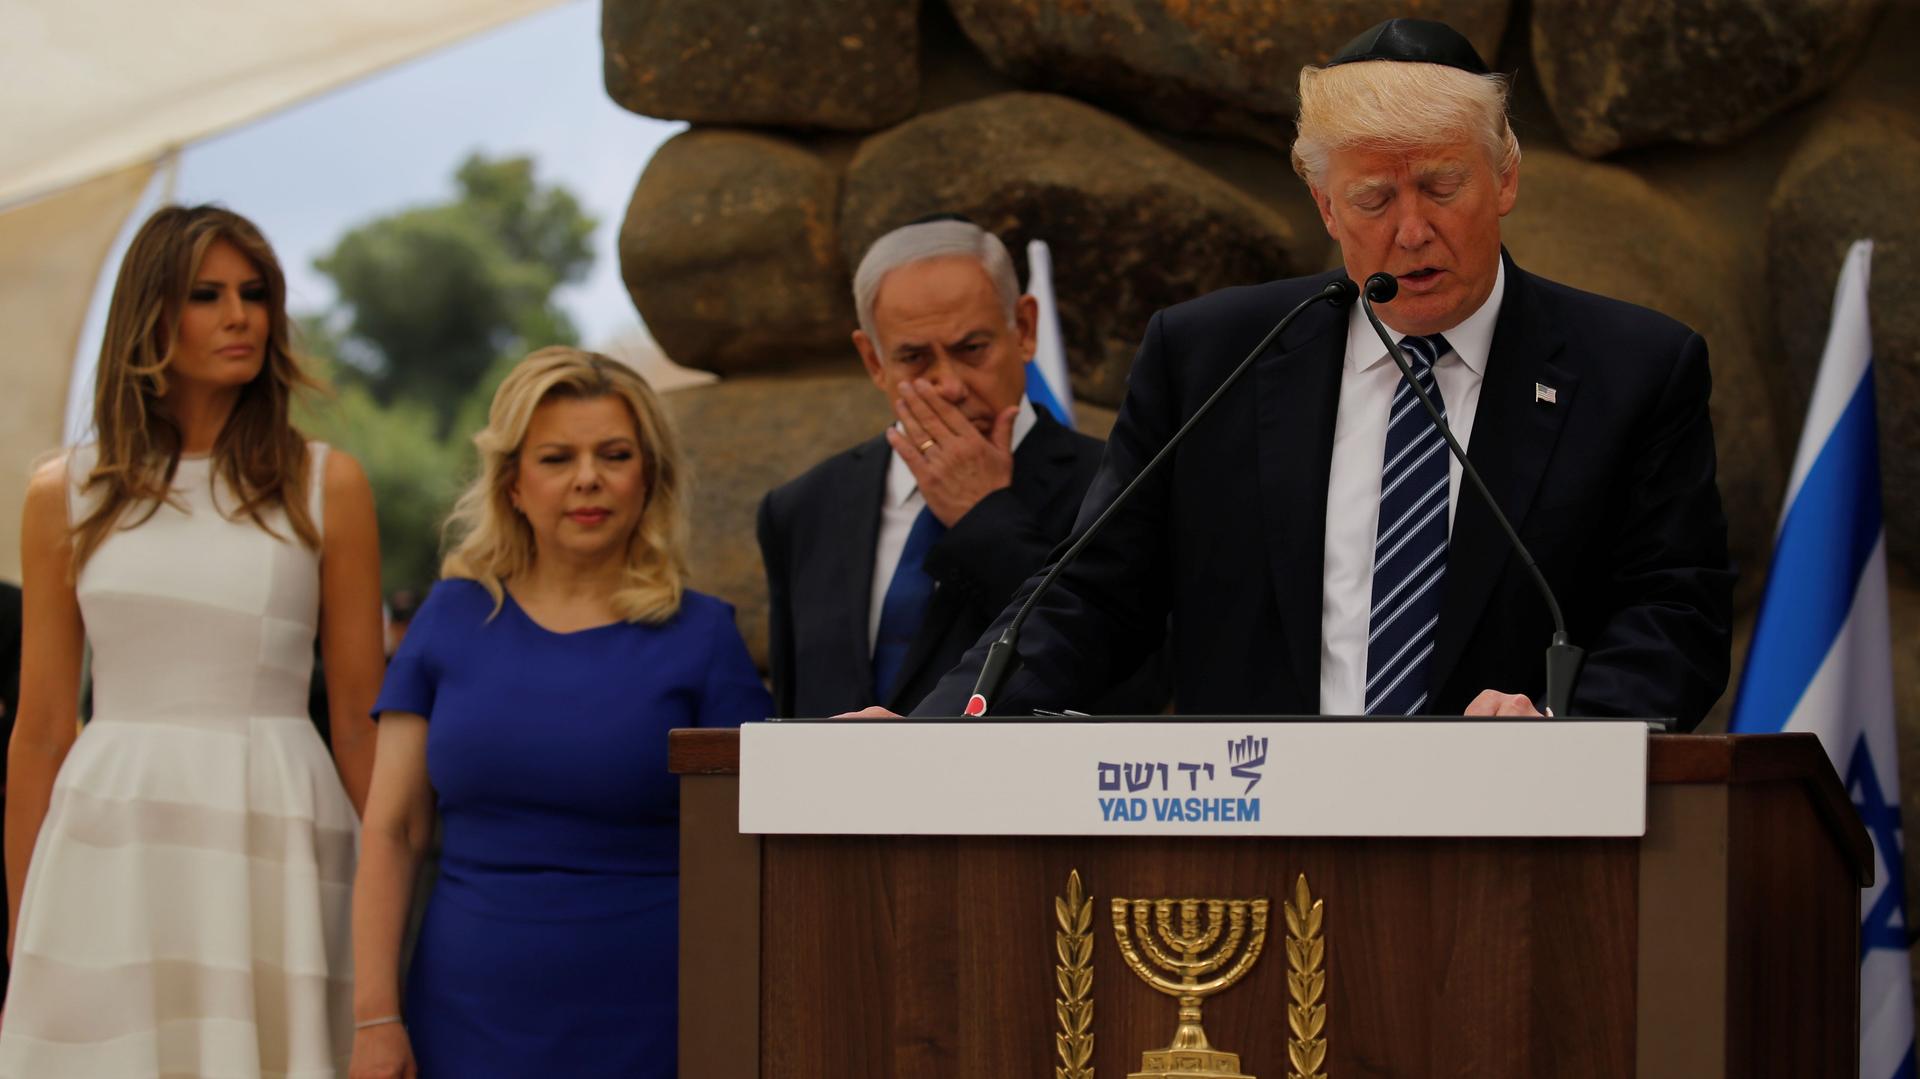 Trump in Israel